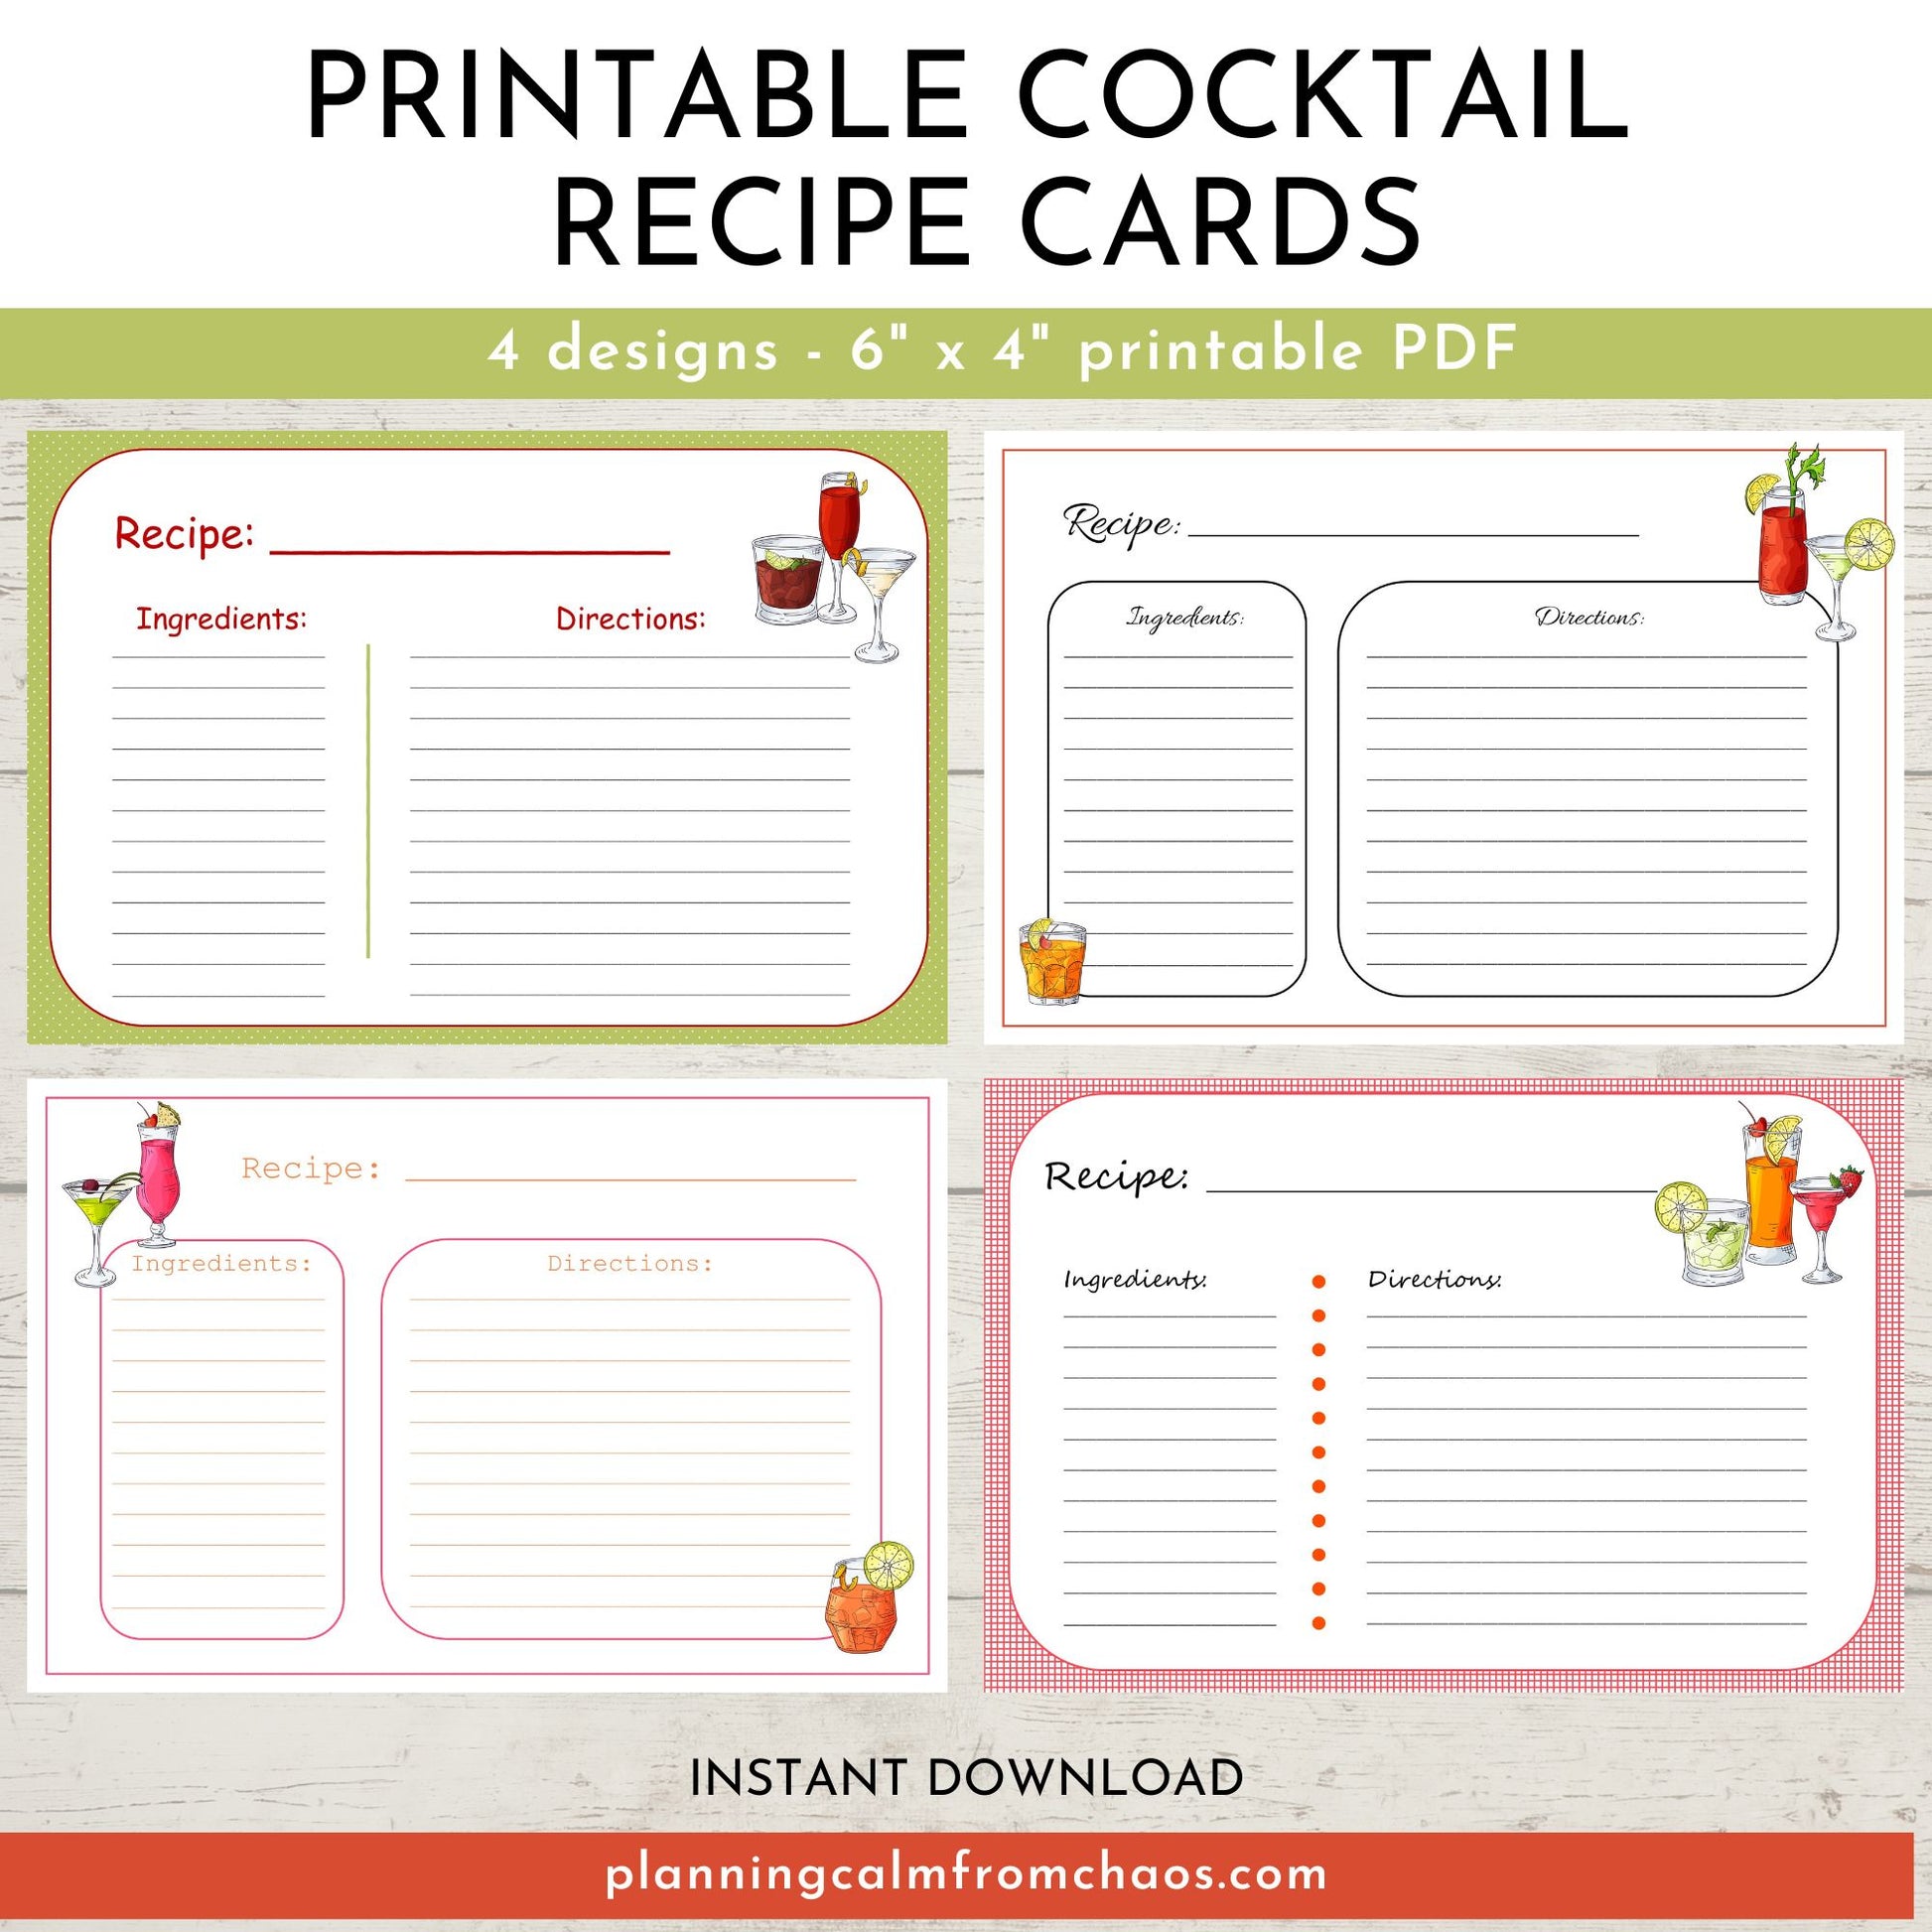 Printable cocktail recipe cards